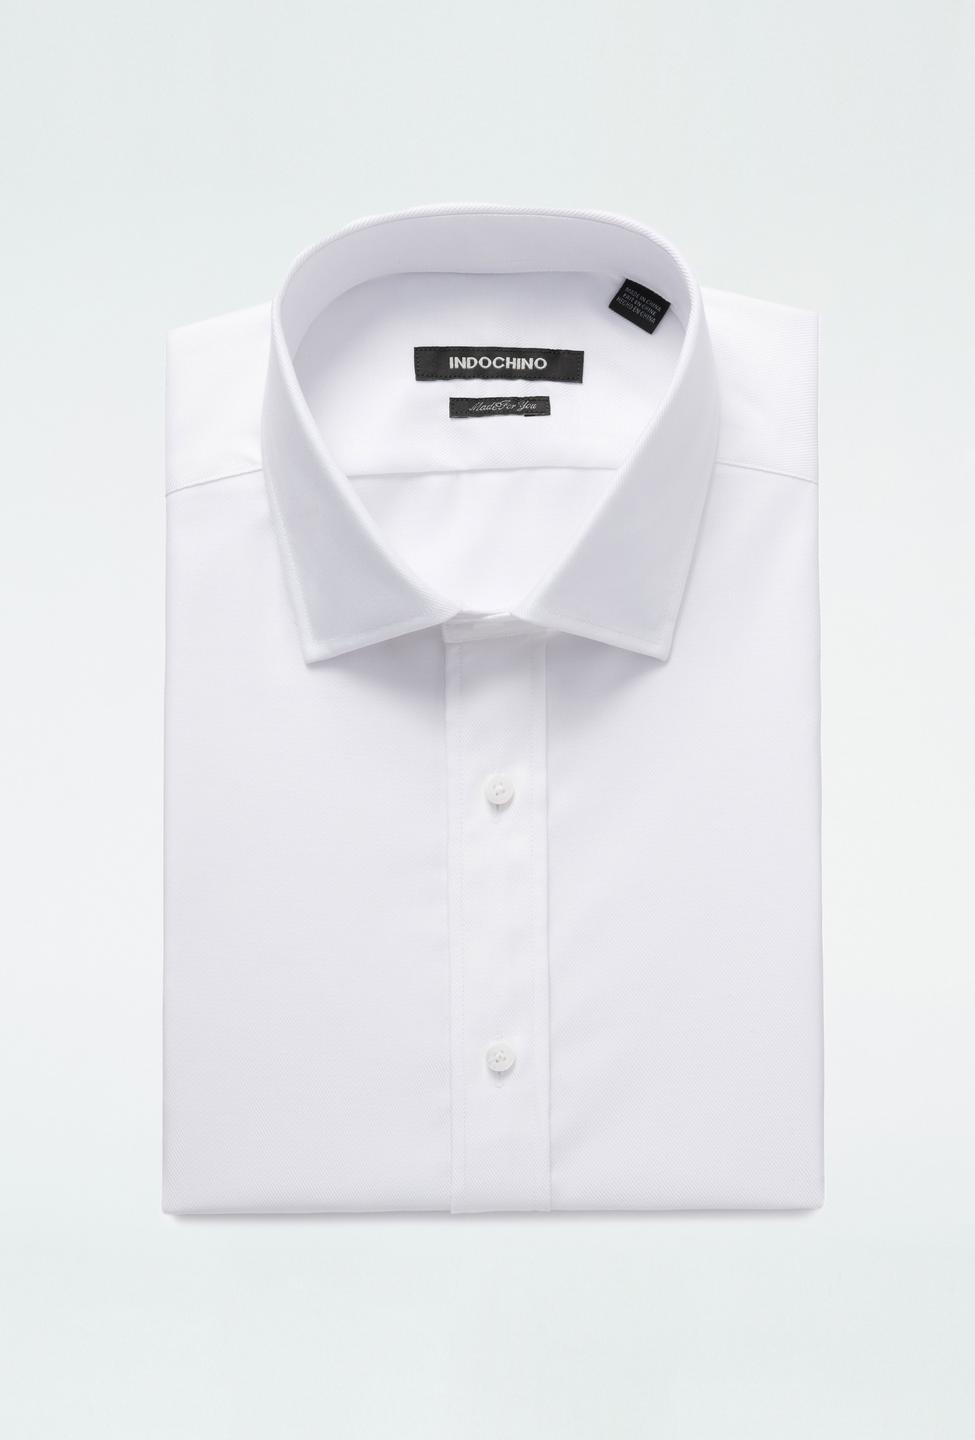 White shirt - Halewood Striped Design from Premium Indochino Collection